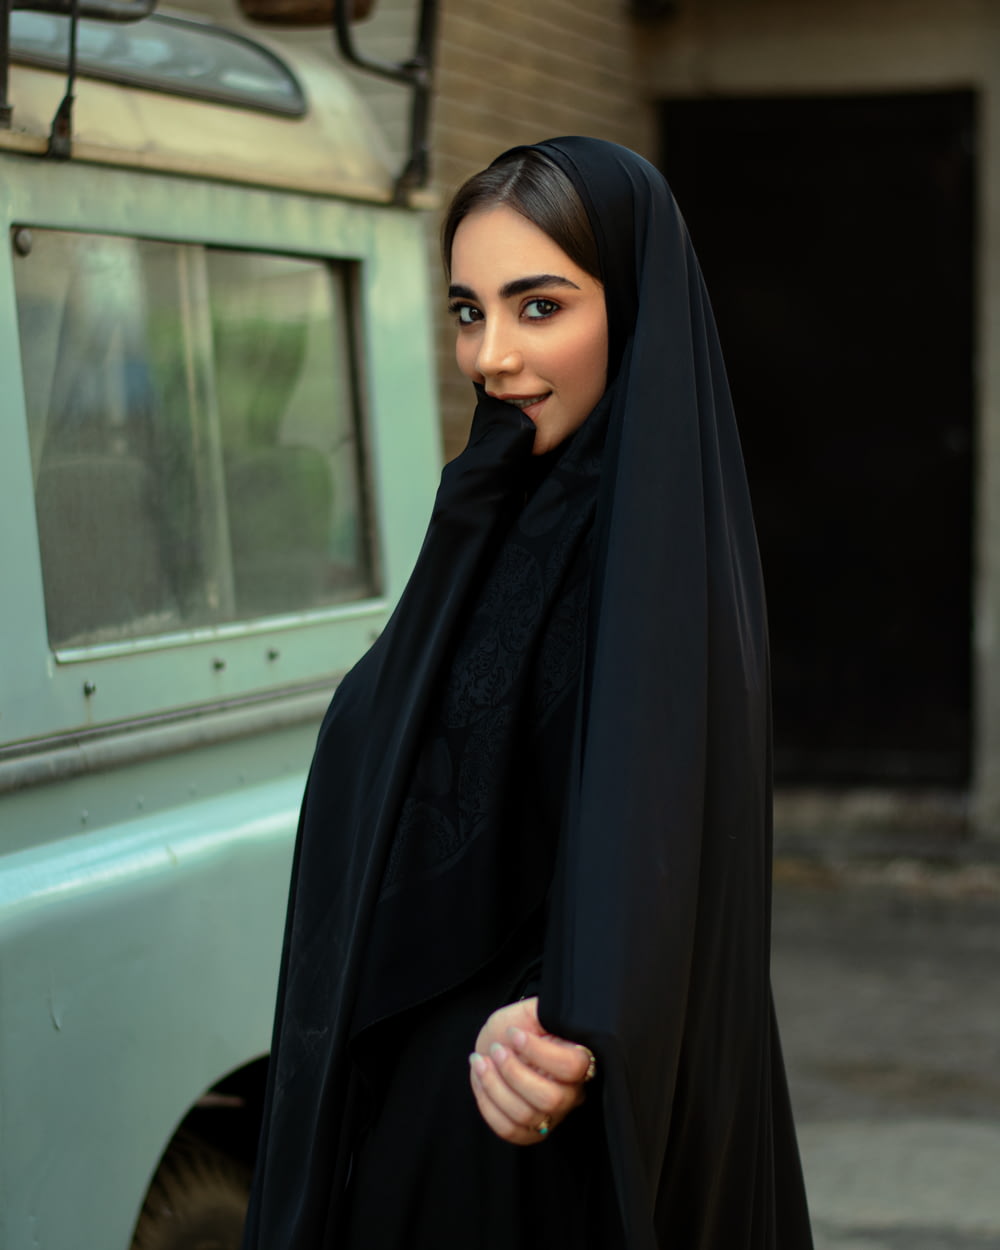 Mujer con hiyab negro y abaya negra